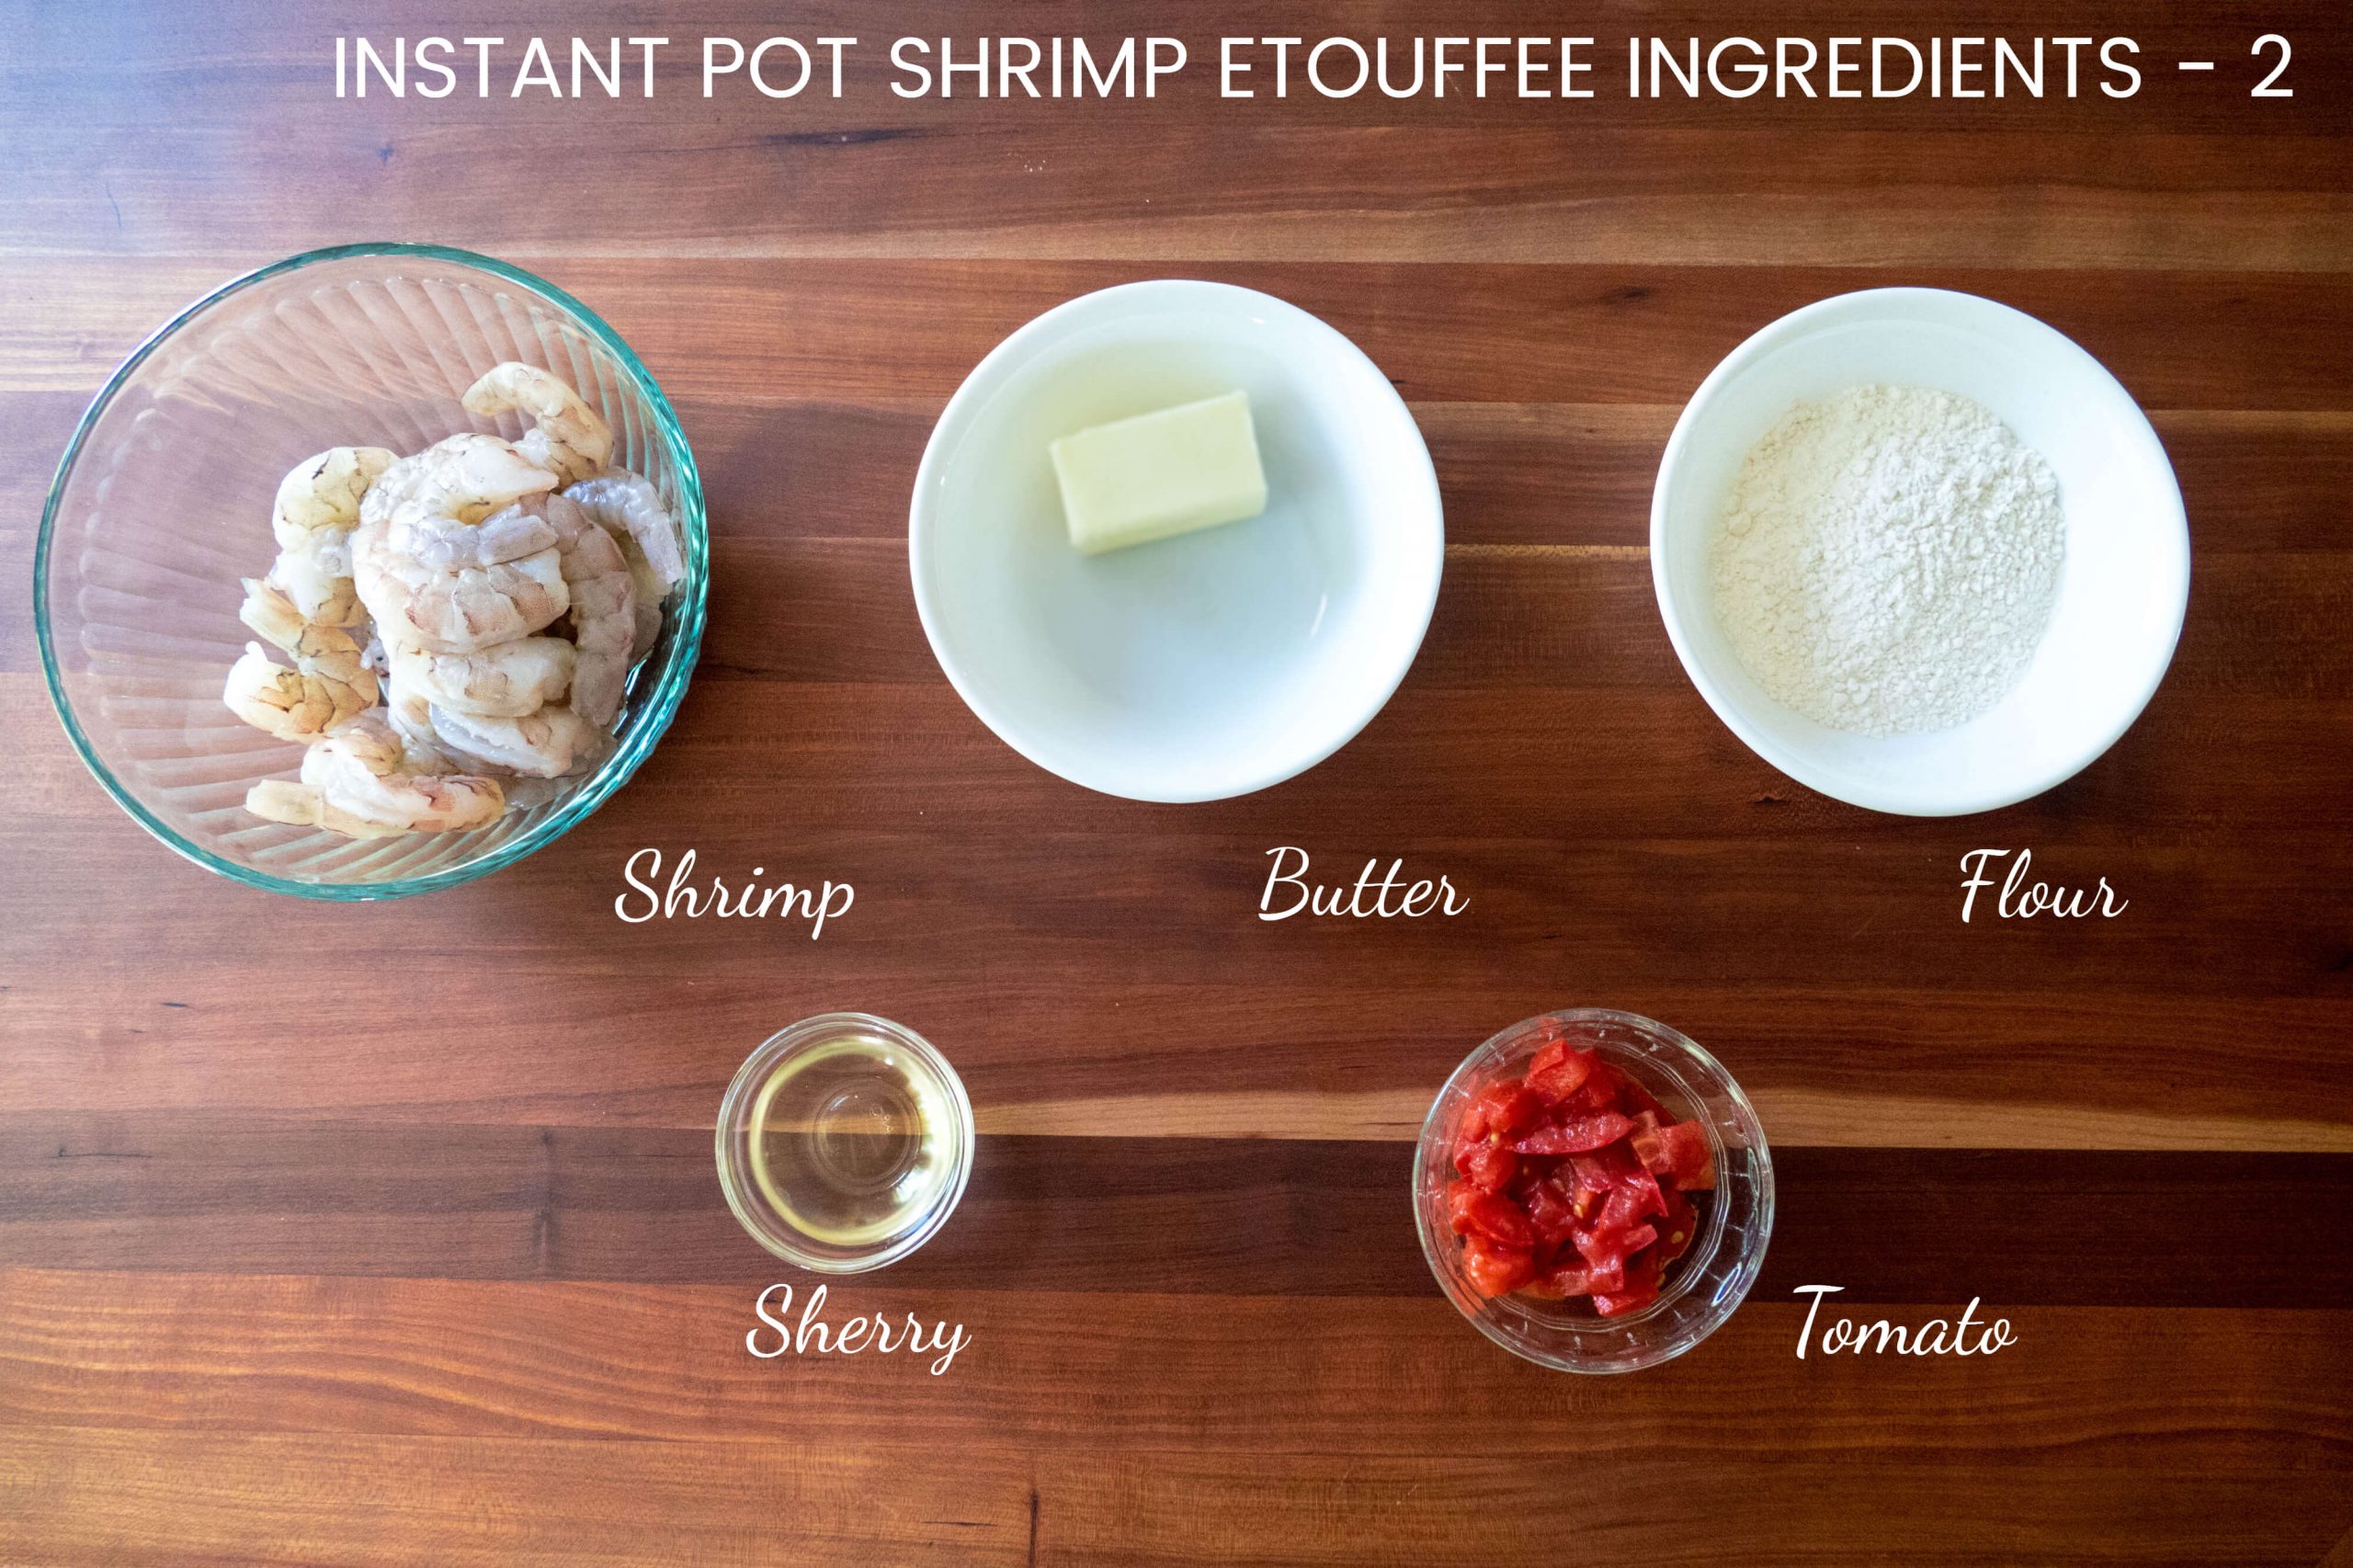 Instant Pot Shrimp Etouffee Ingredients part 2 - shrimp, butter, flour, sherry, tomato - Paint the Kitchen Red